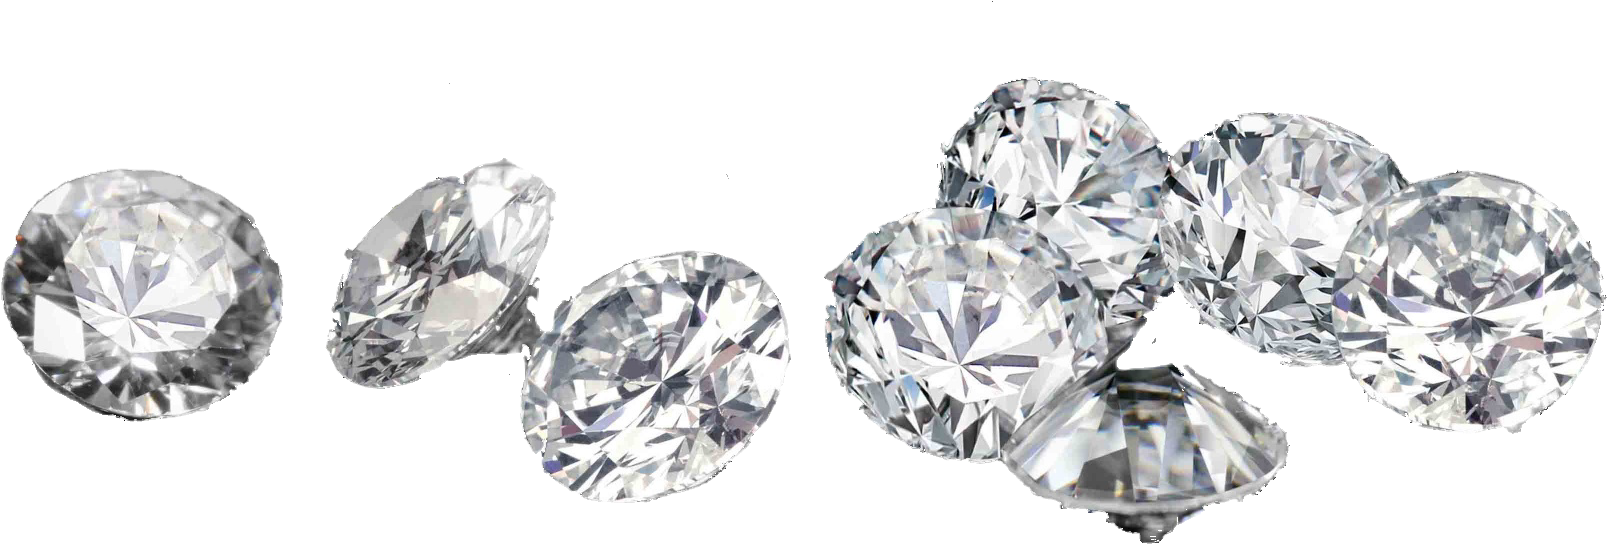 Diamonds Png Image - Transparent Background Diamonds Png Clipart (1920x1200), Png Download